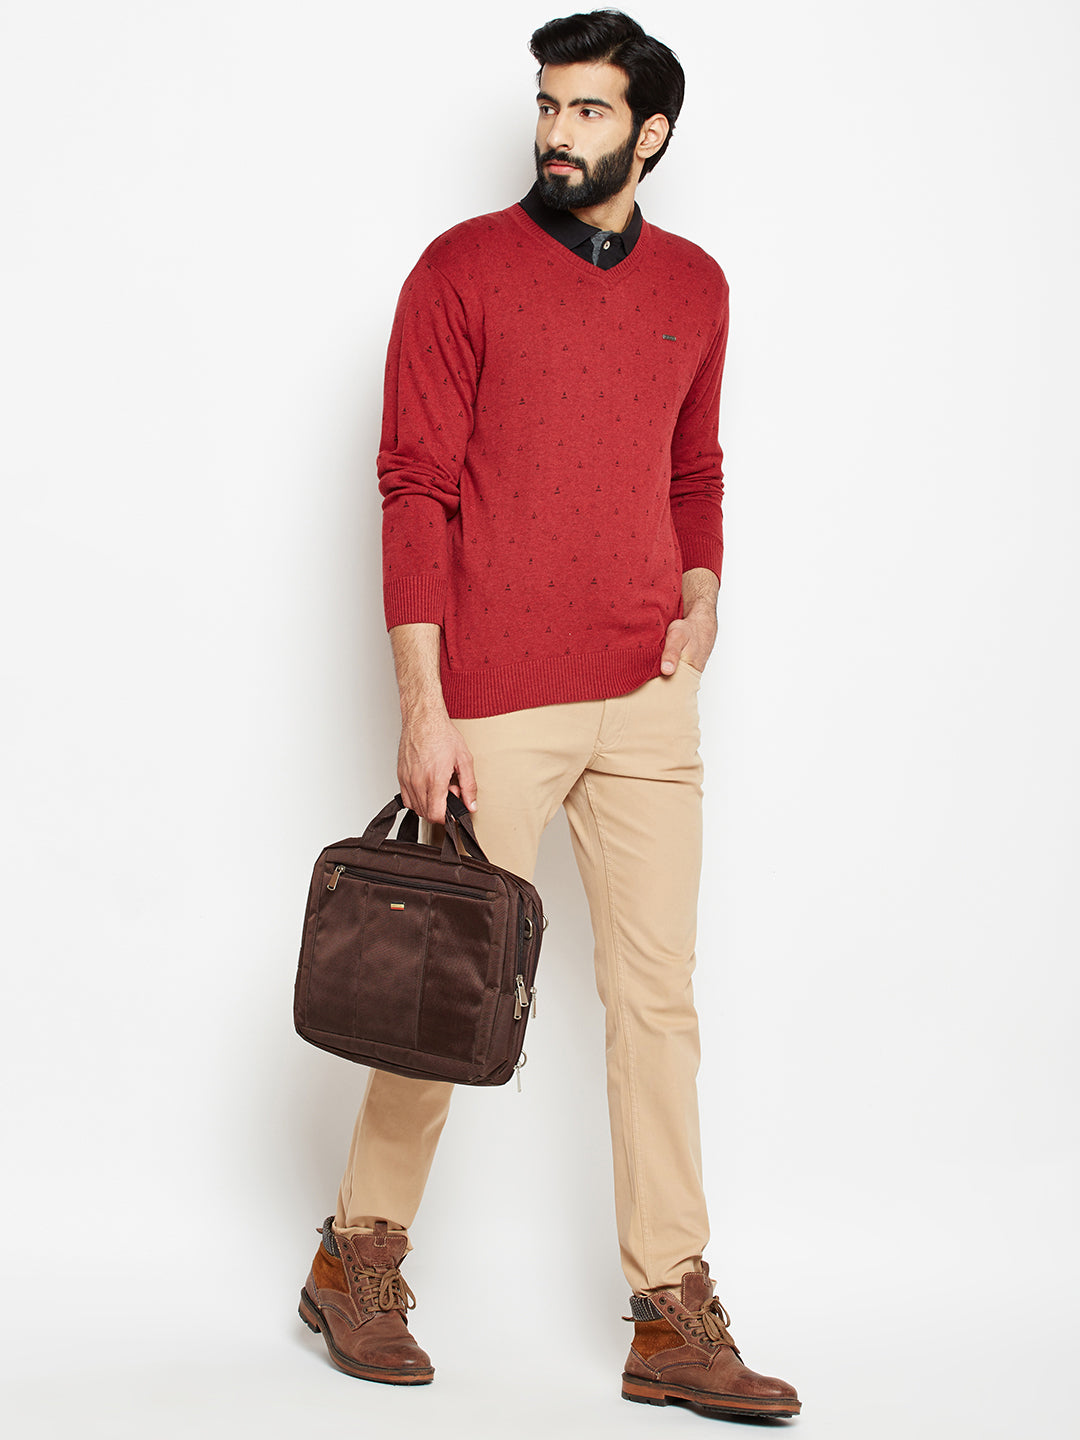 Red Printed Sweater-Men Sweaters-Crimsoune Club